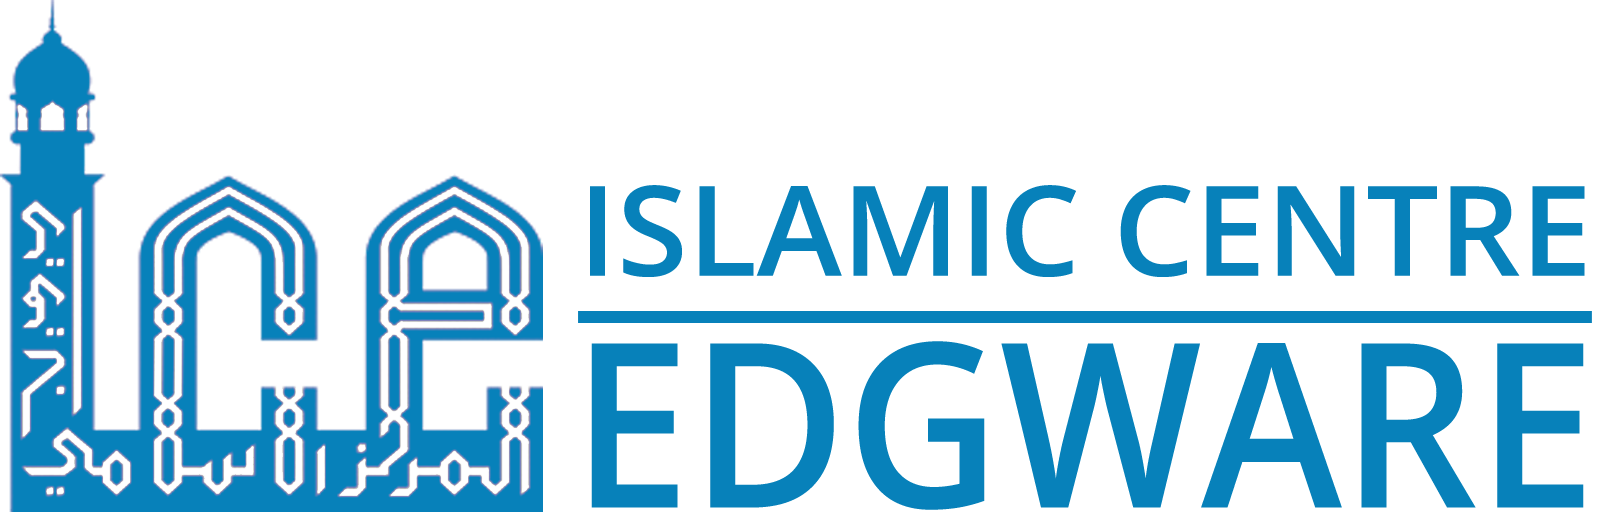 Islamic Centre Edgware